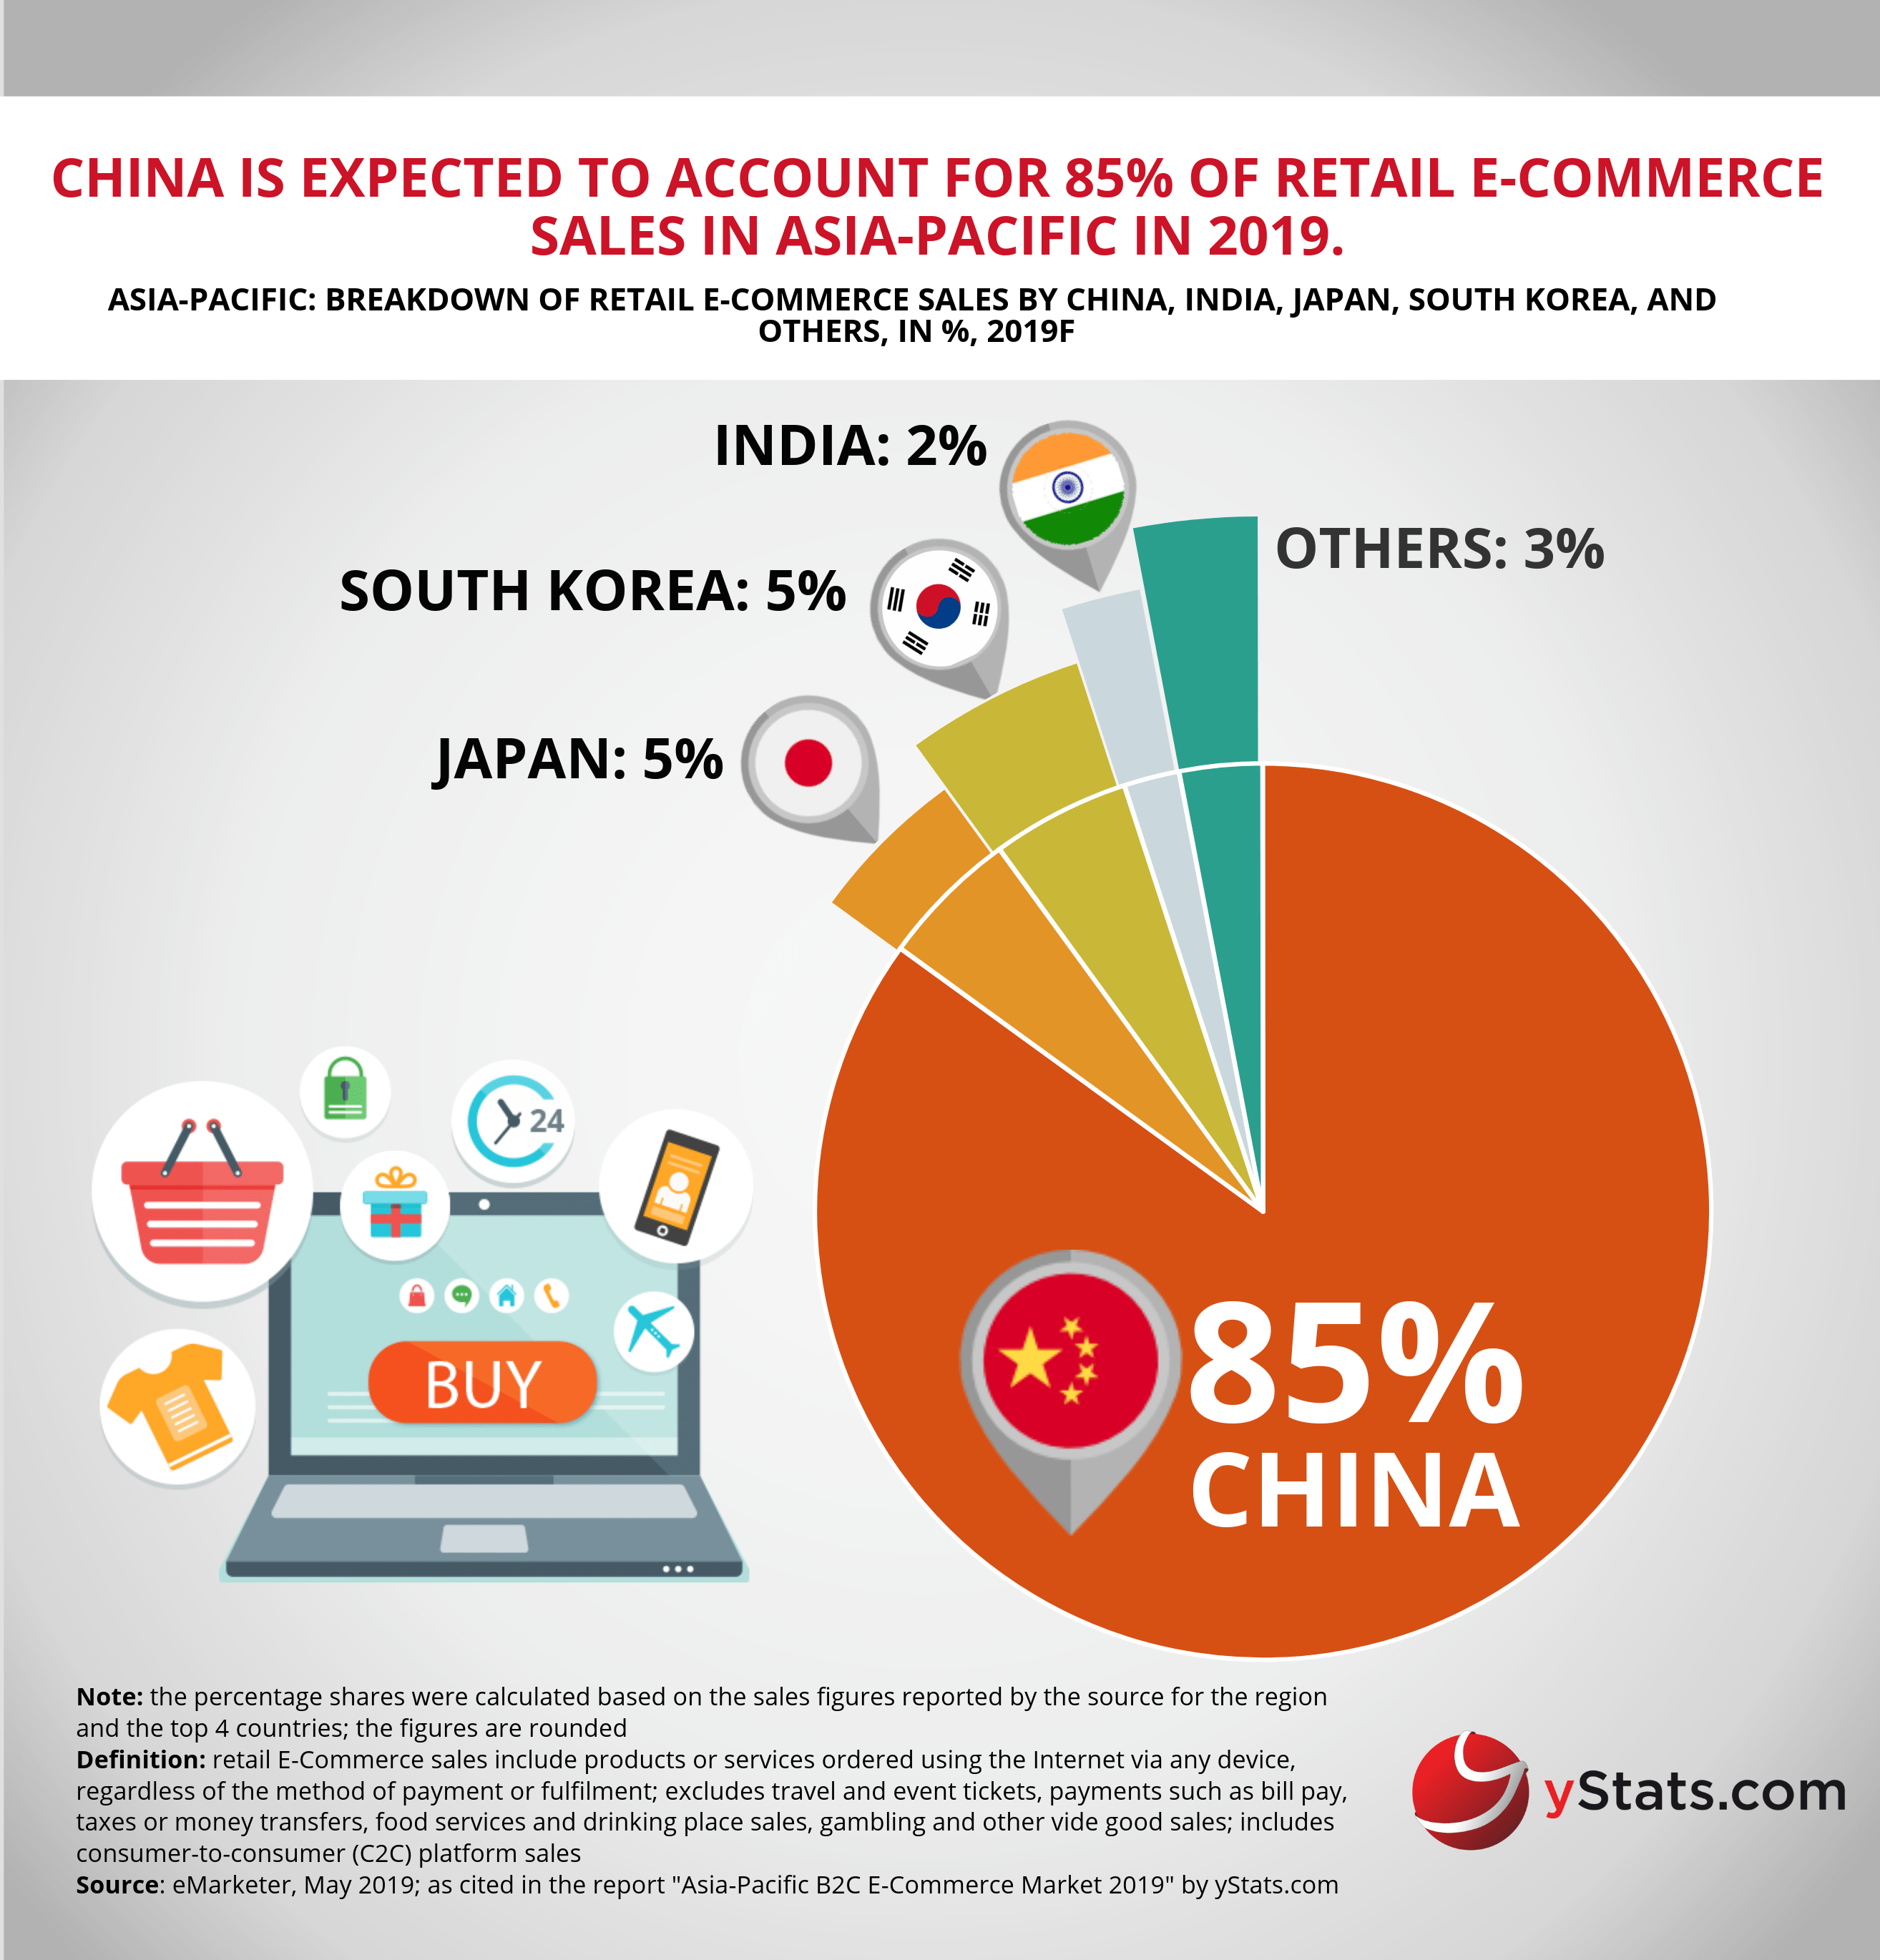 Infographic: Asia-Pacific B2C E-Commerce Market 2019